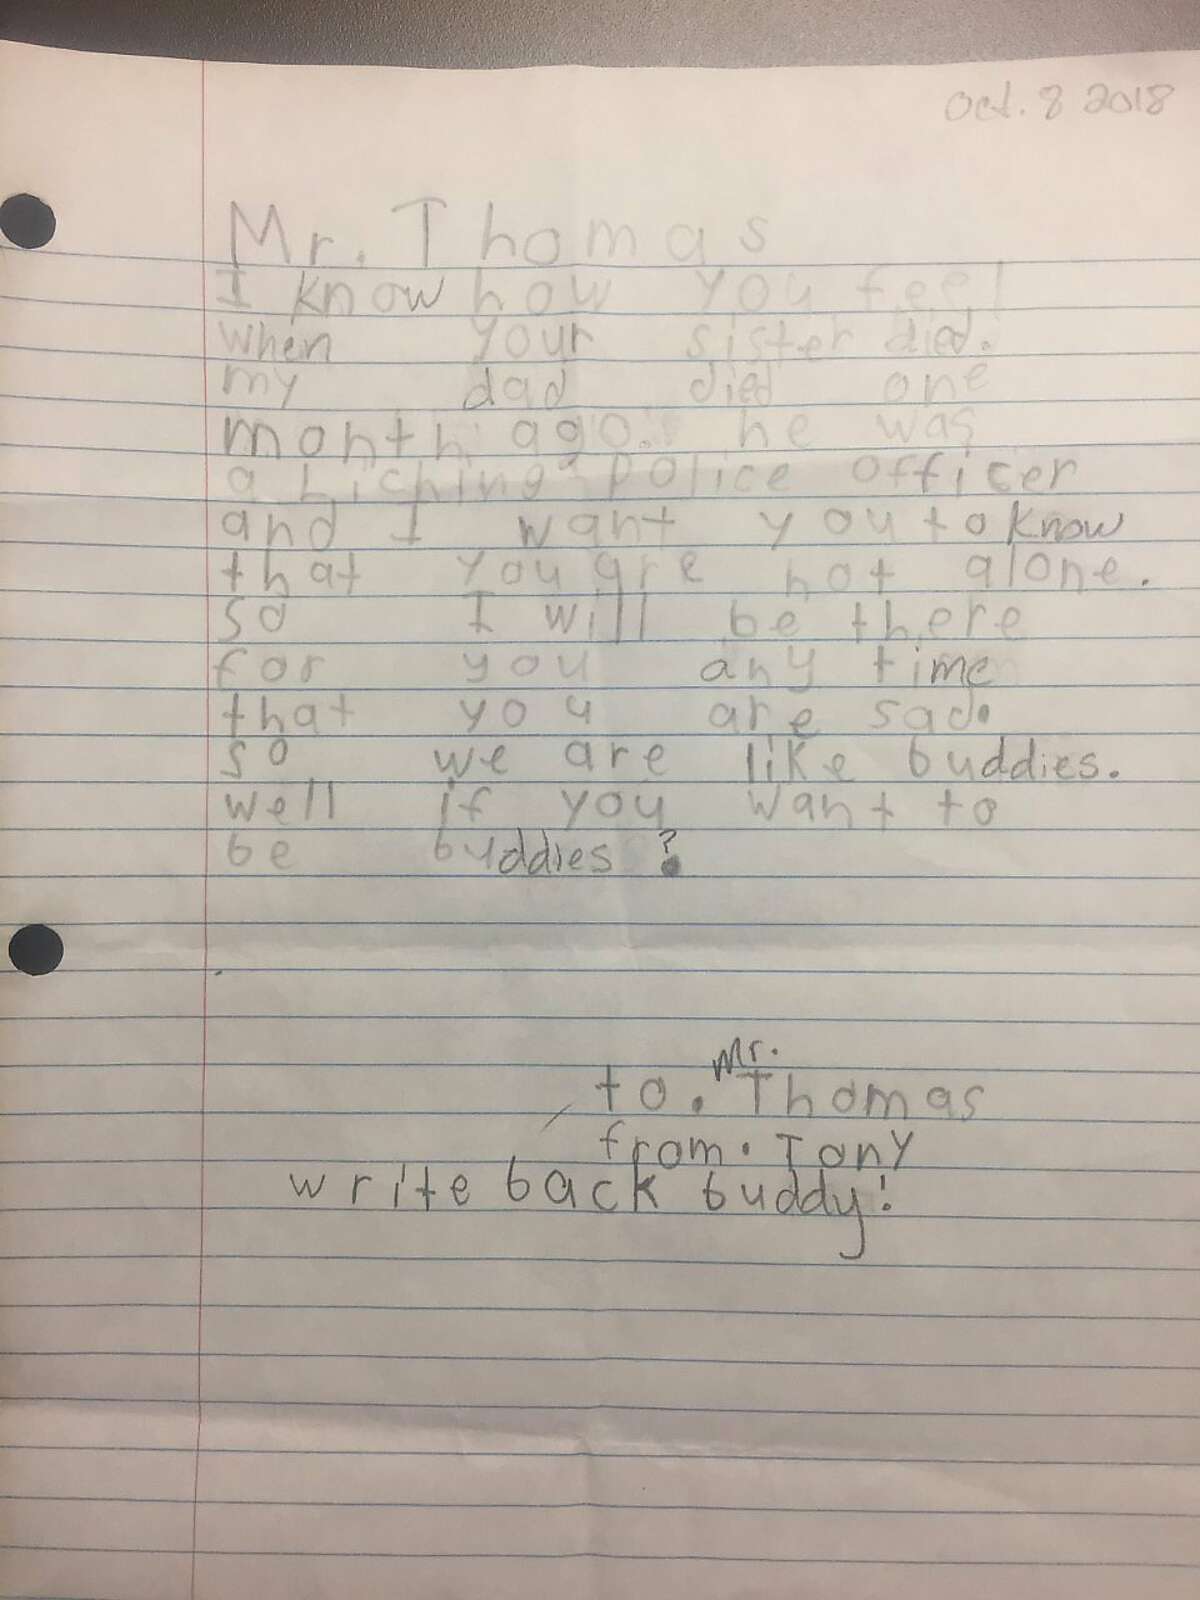 The letter Tony Hood, 9, wrote to Solomon Thomas.